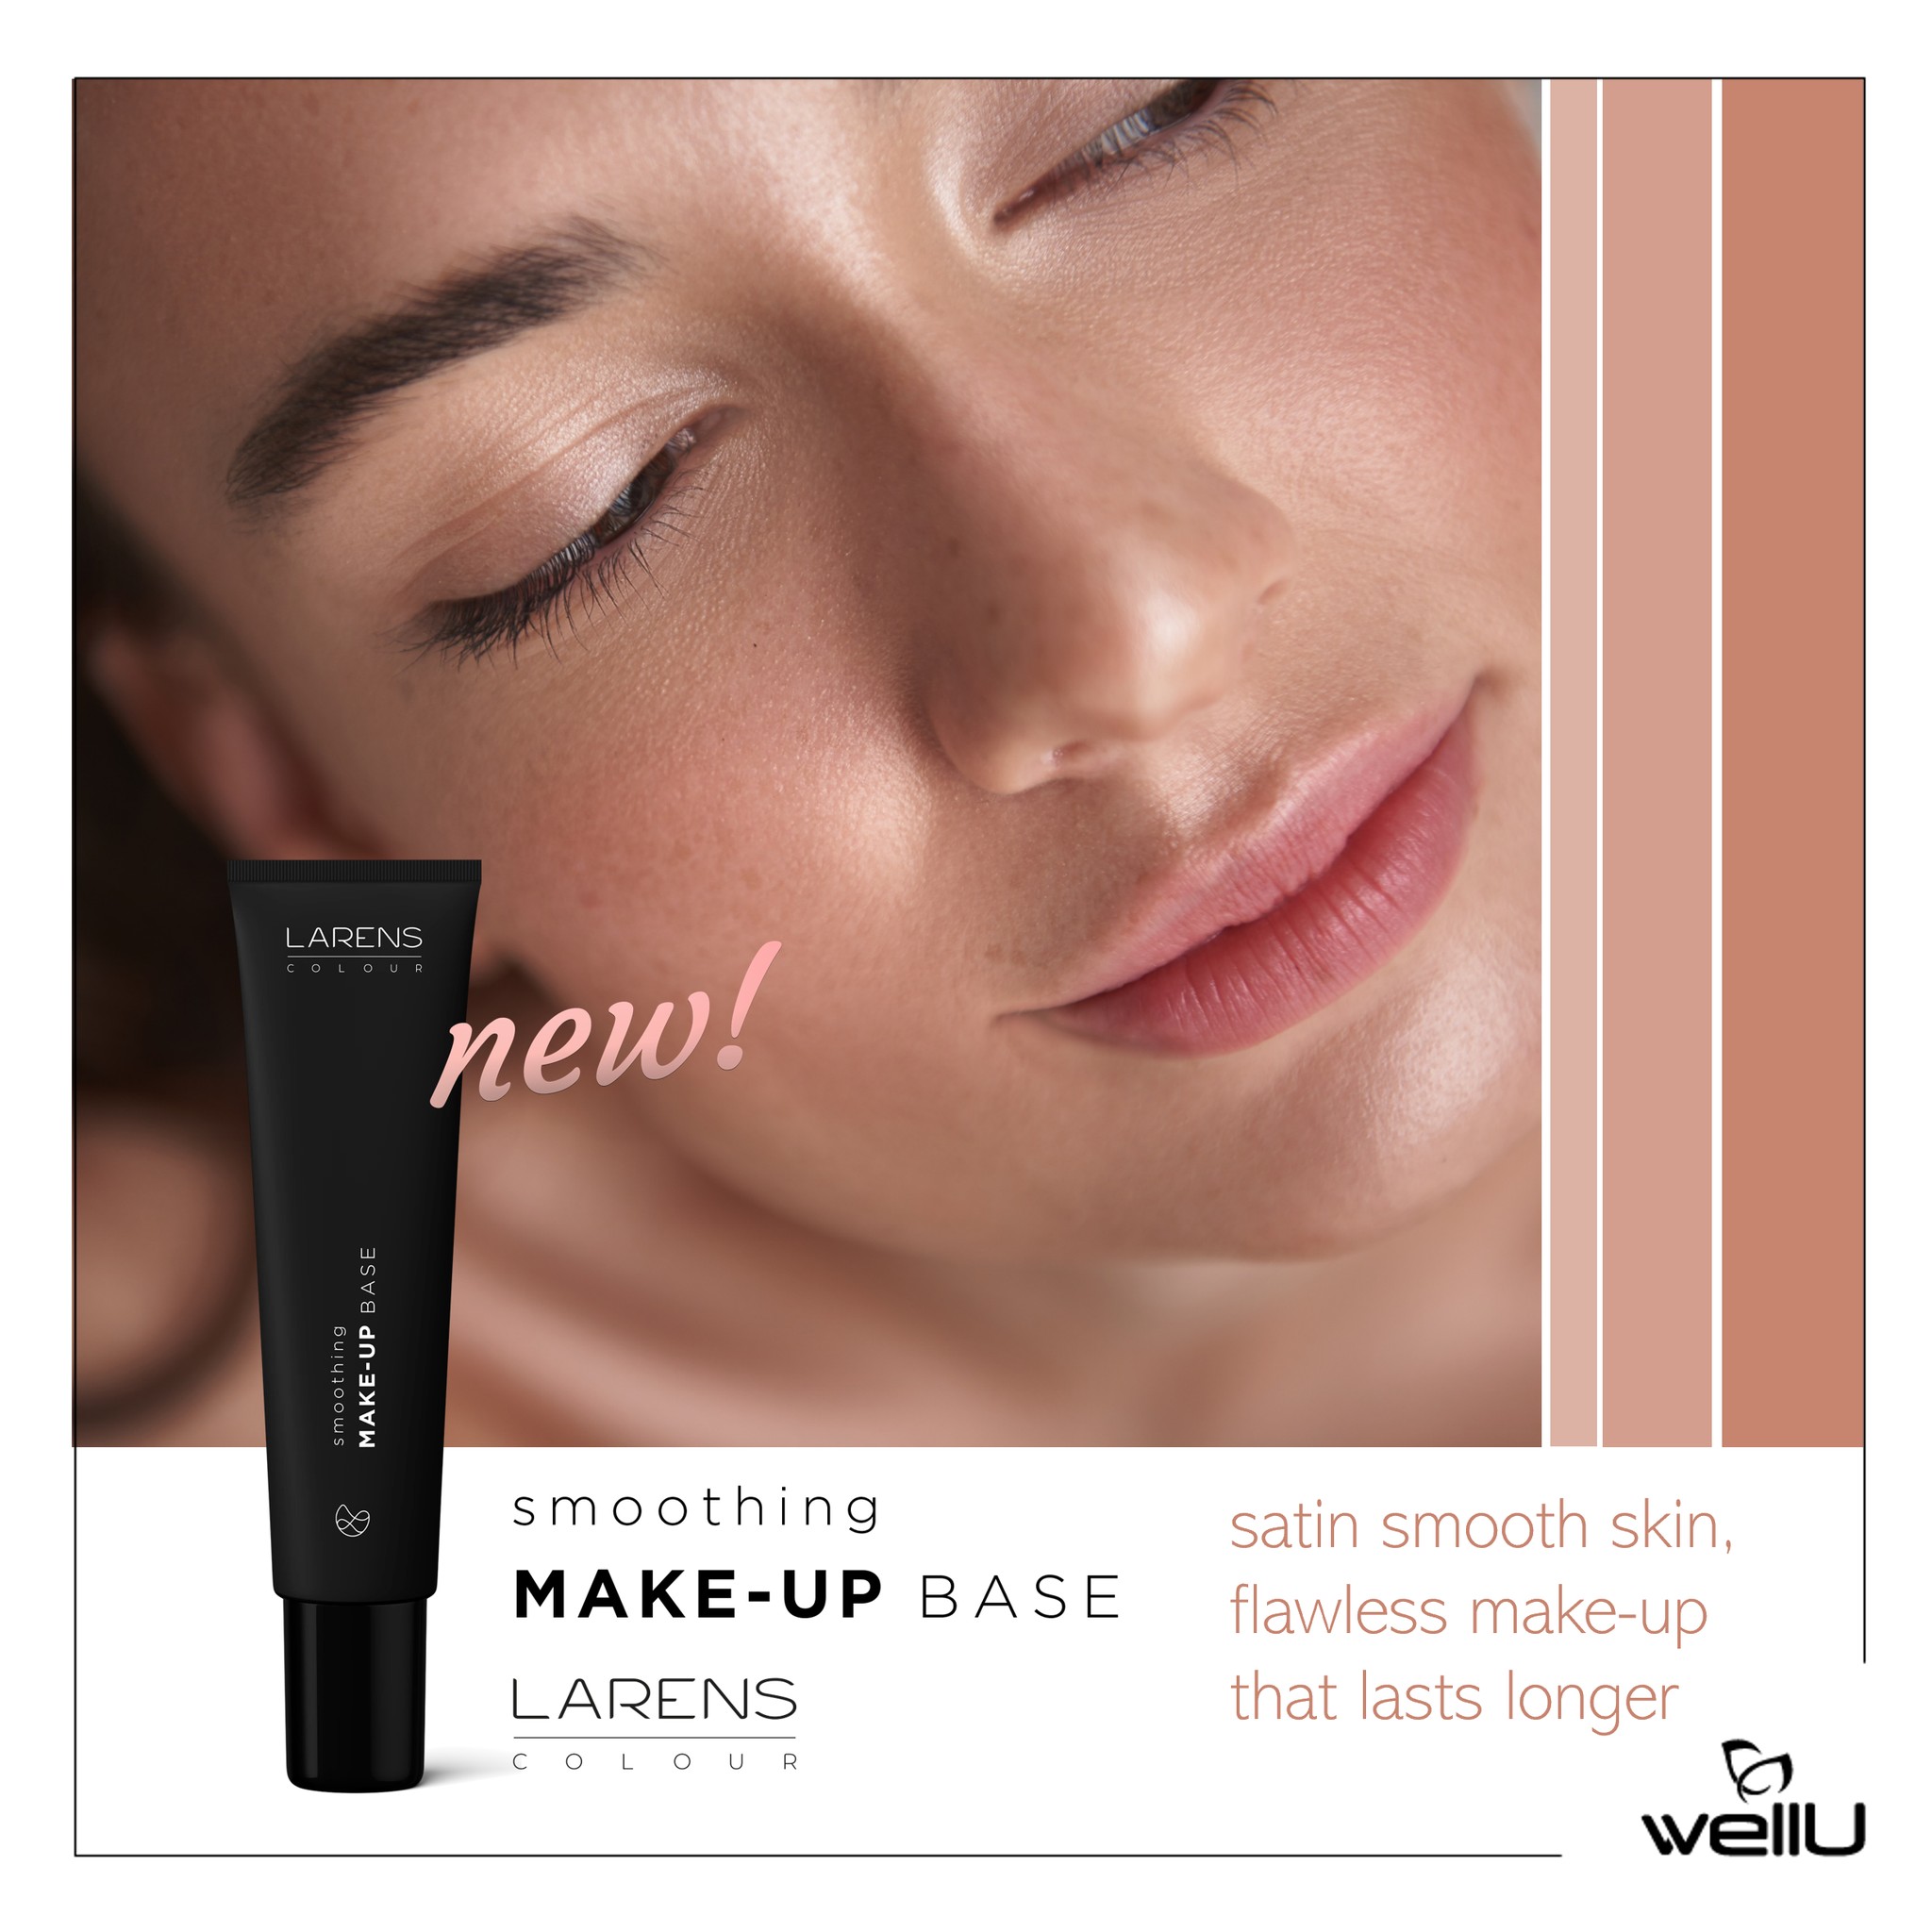 Smoothing Make-up Base od Larens pod lupou